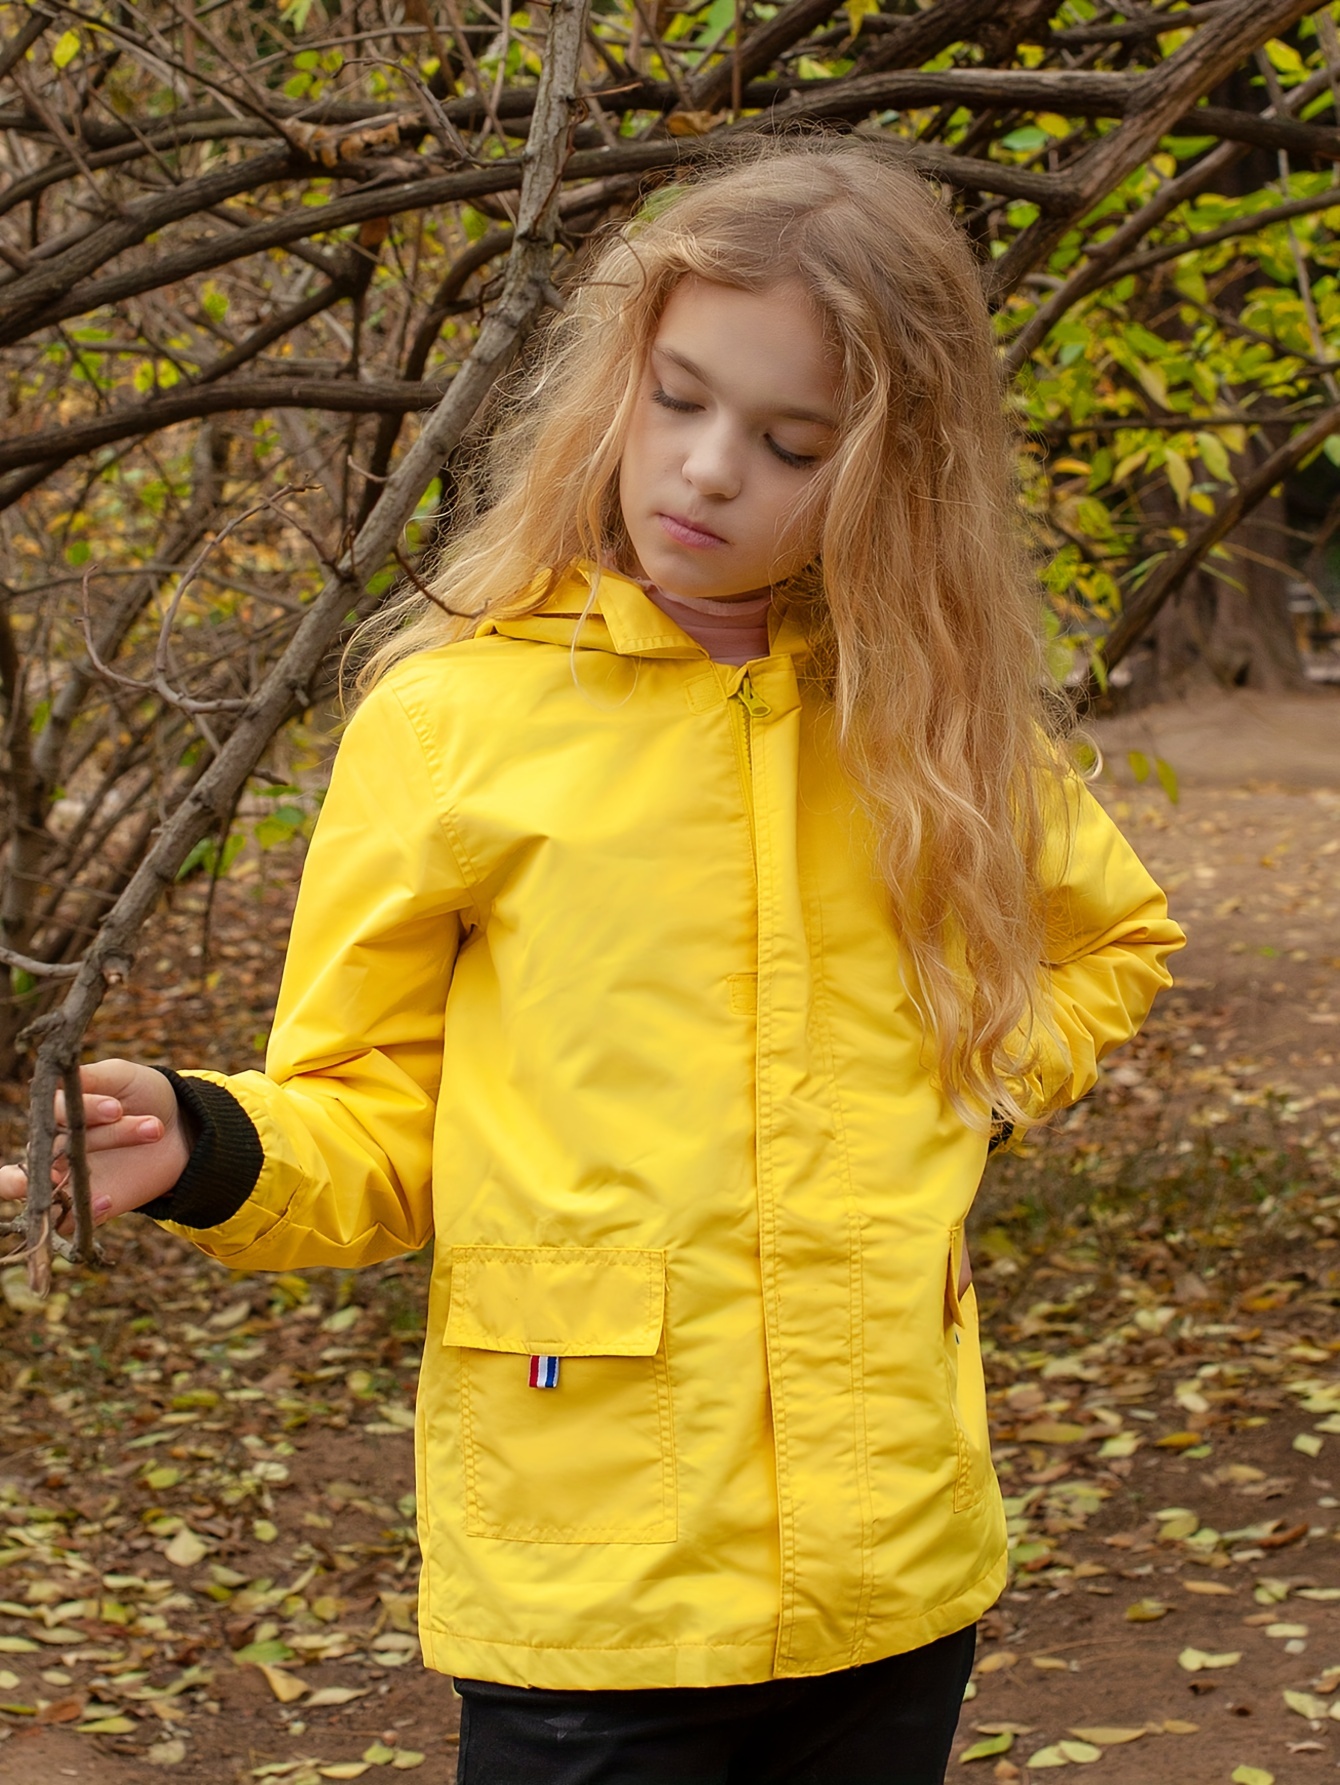 Autumn Youth Girls Rain Coat - Stylish & Waterproof Outerwear